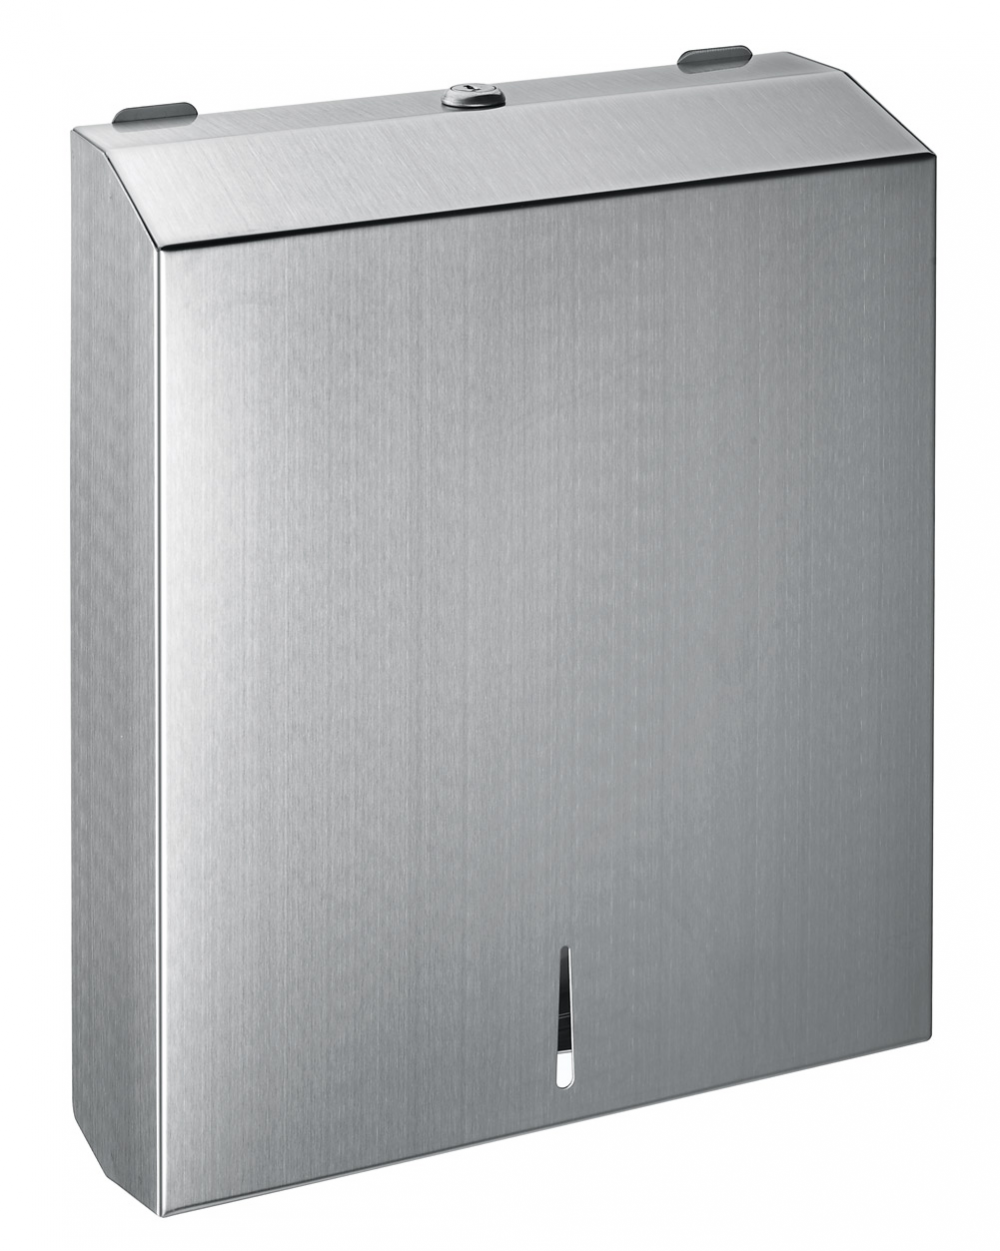 Stainless Steel Paper Towel Dispenser